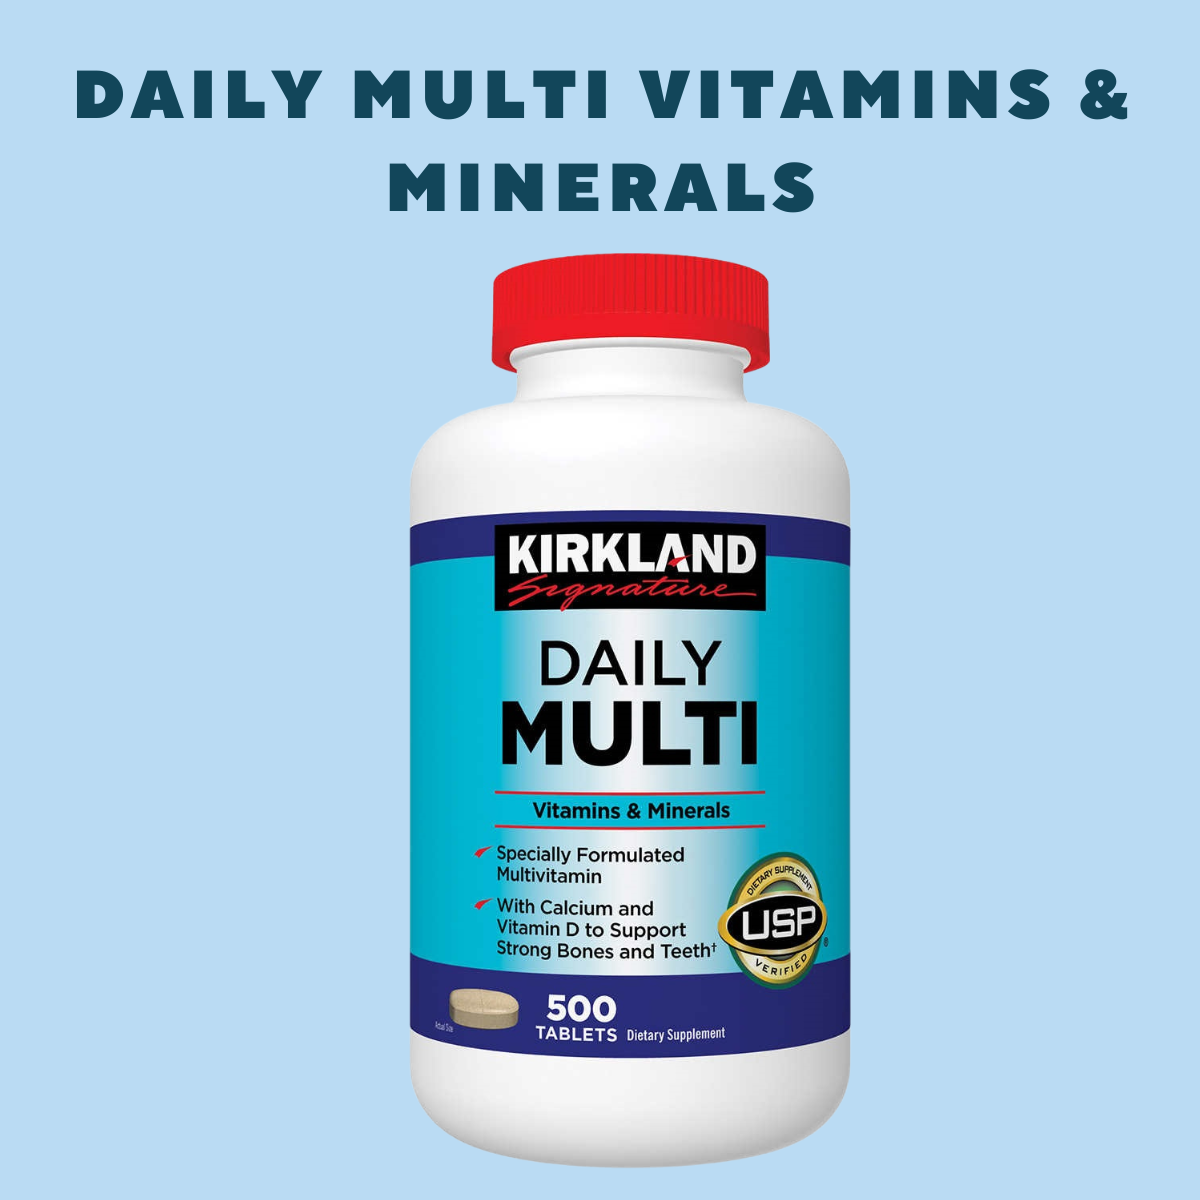 Daily Multi Vitamins & Minerals Kirkland có công dugnj gì?